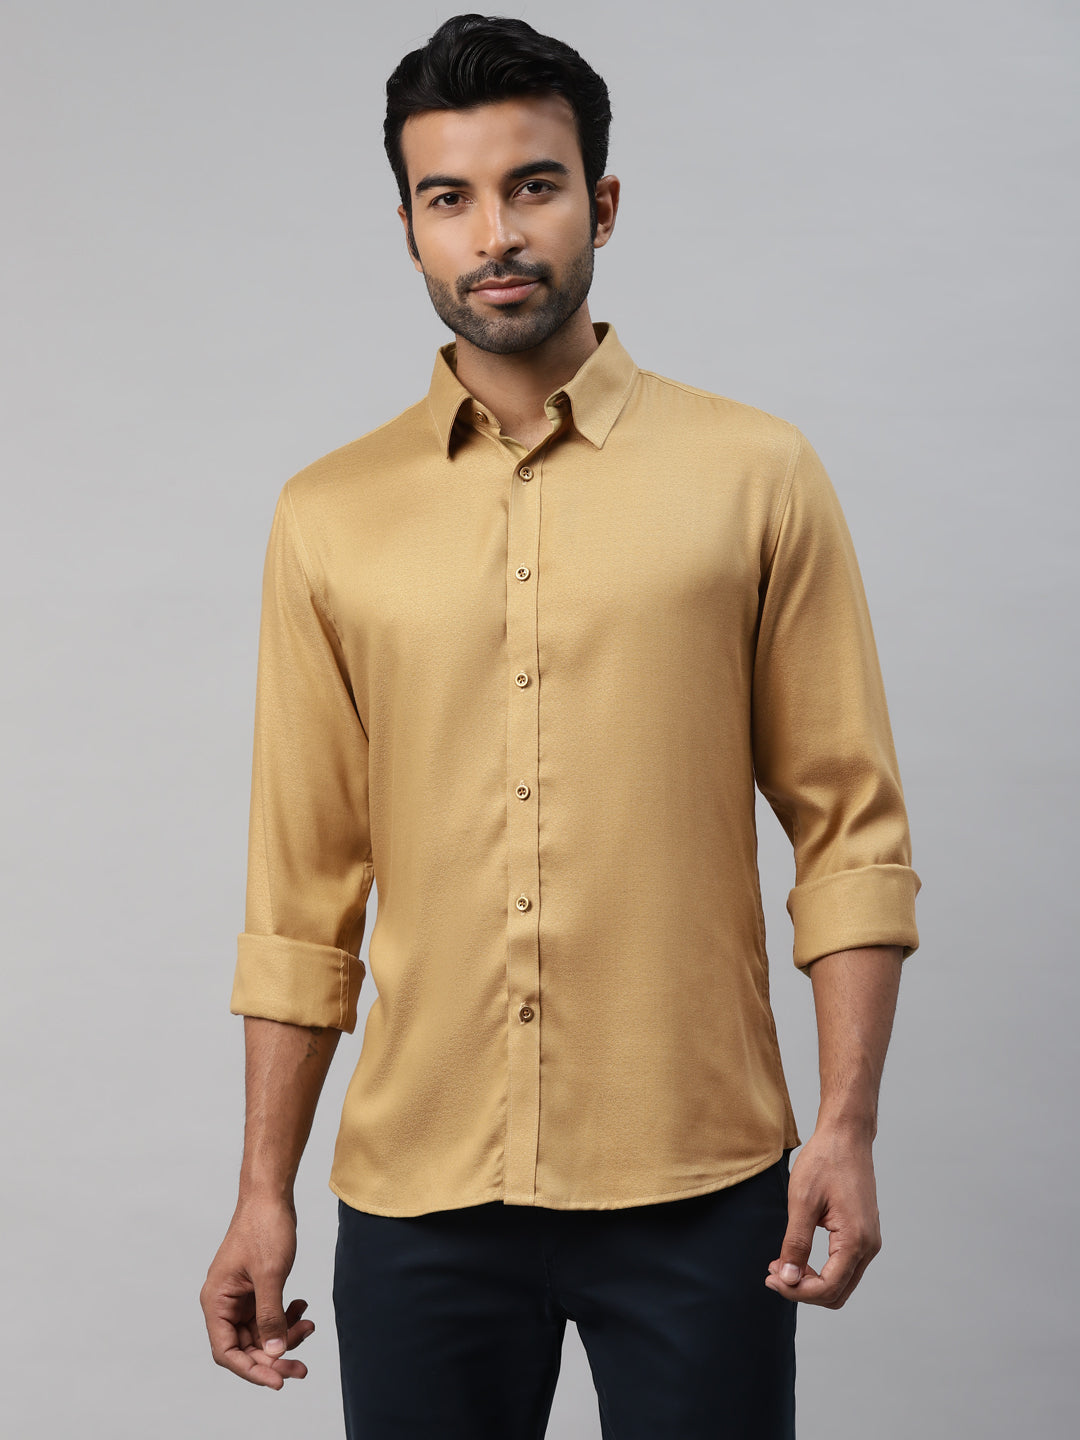 Don Vino Men's Gold Slim Fit Shirt